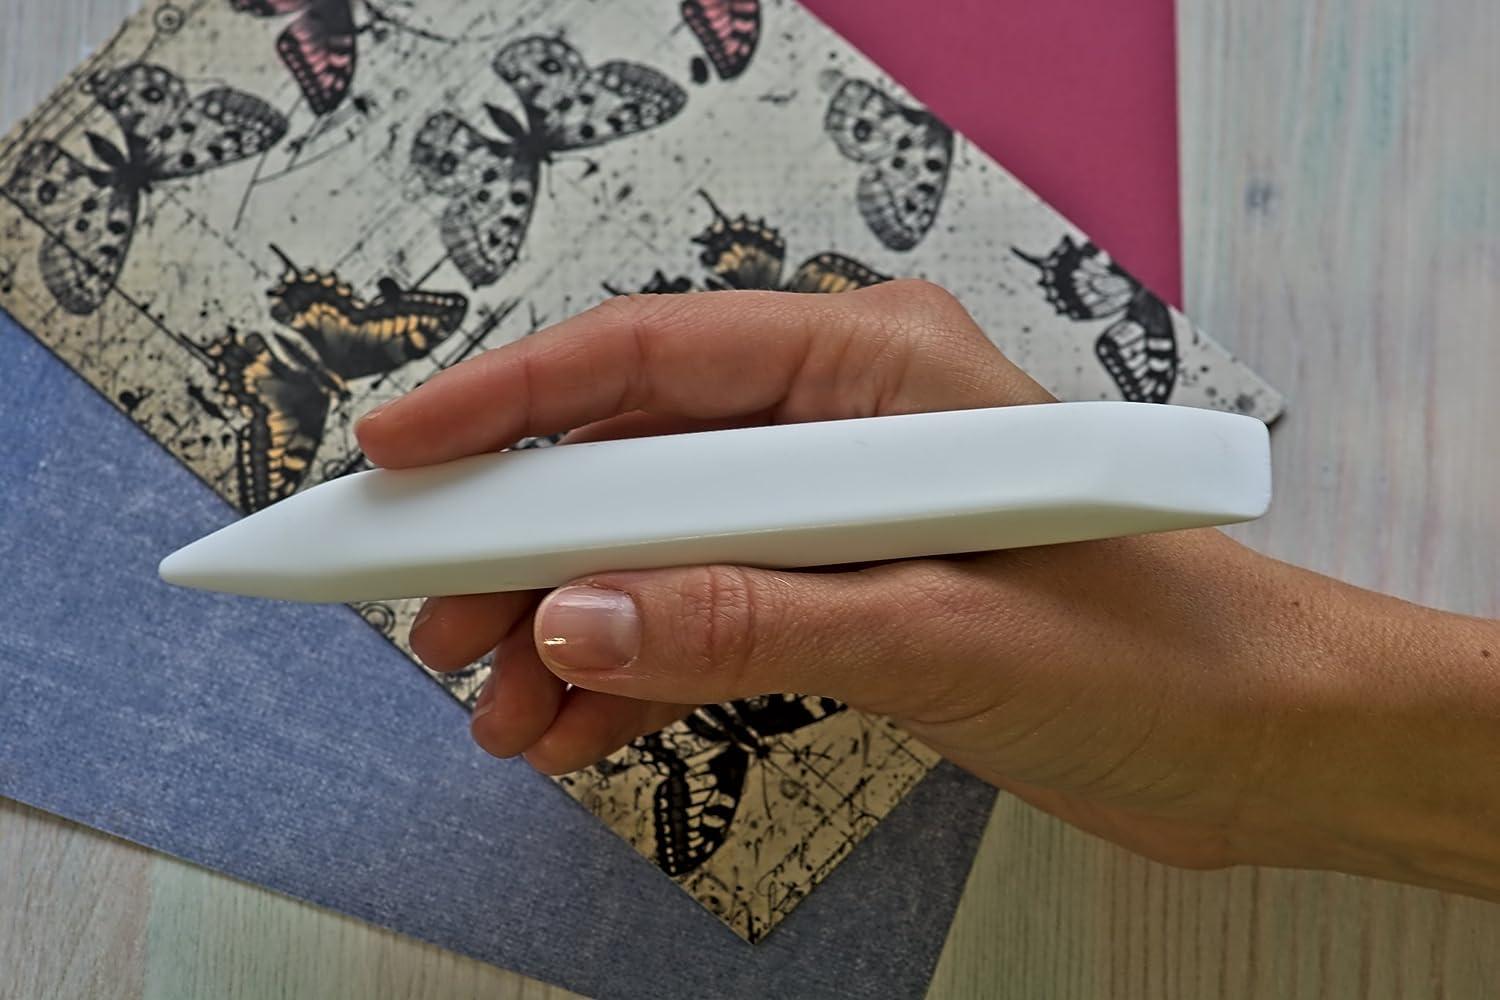 Asfroy Large Teflon Bone Folder - Large Handmade Tool Best for Bookbinding  Origami Paper Crafts Scoring Folding Creasing. Non Scratch Non Glaze Non  Stick. Smooth Ergonomic and Handmade